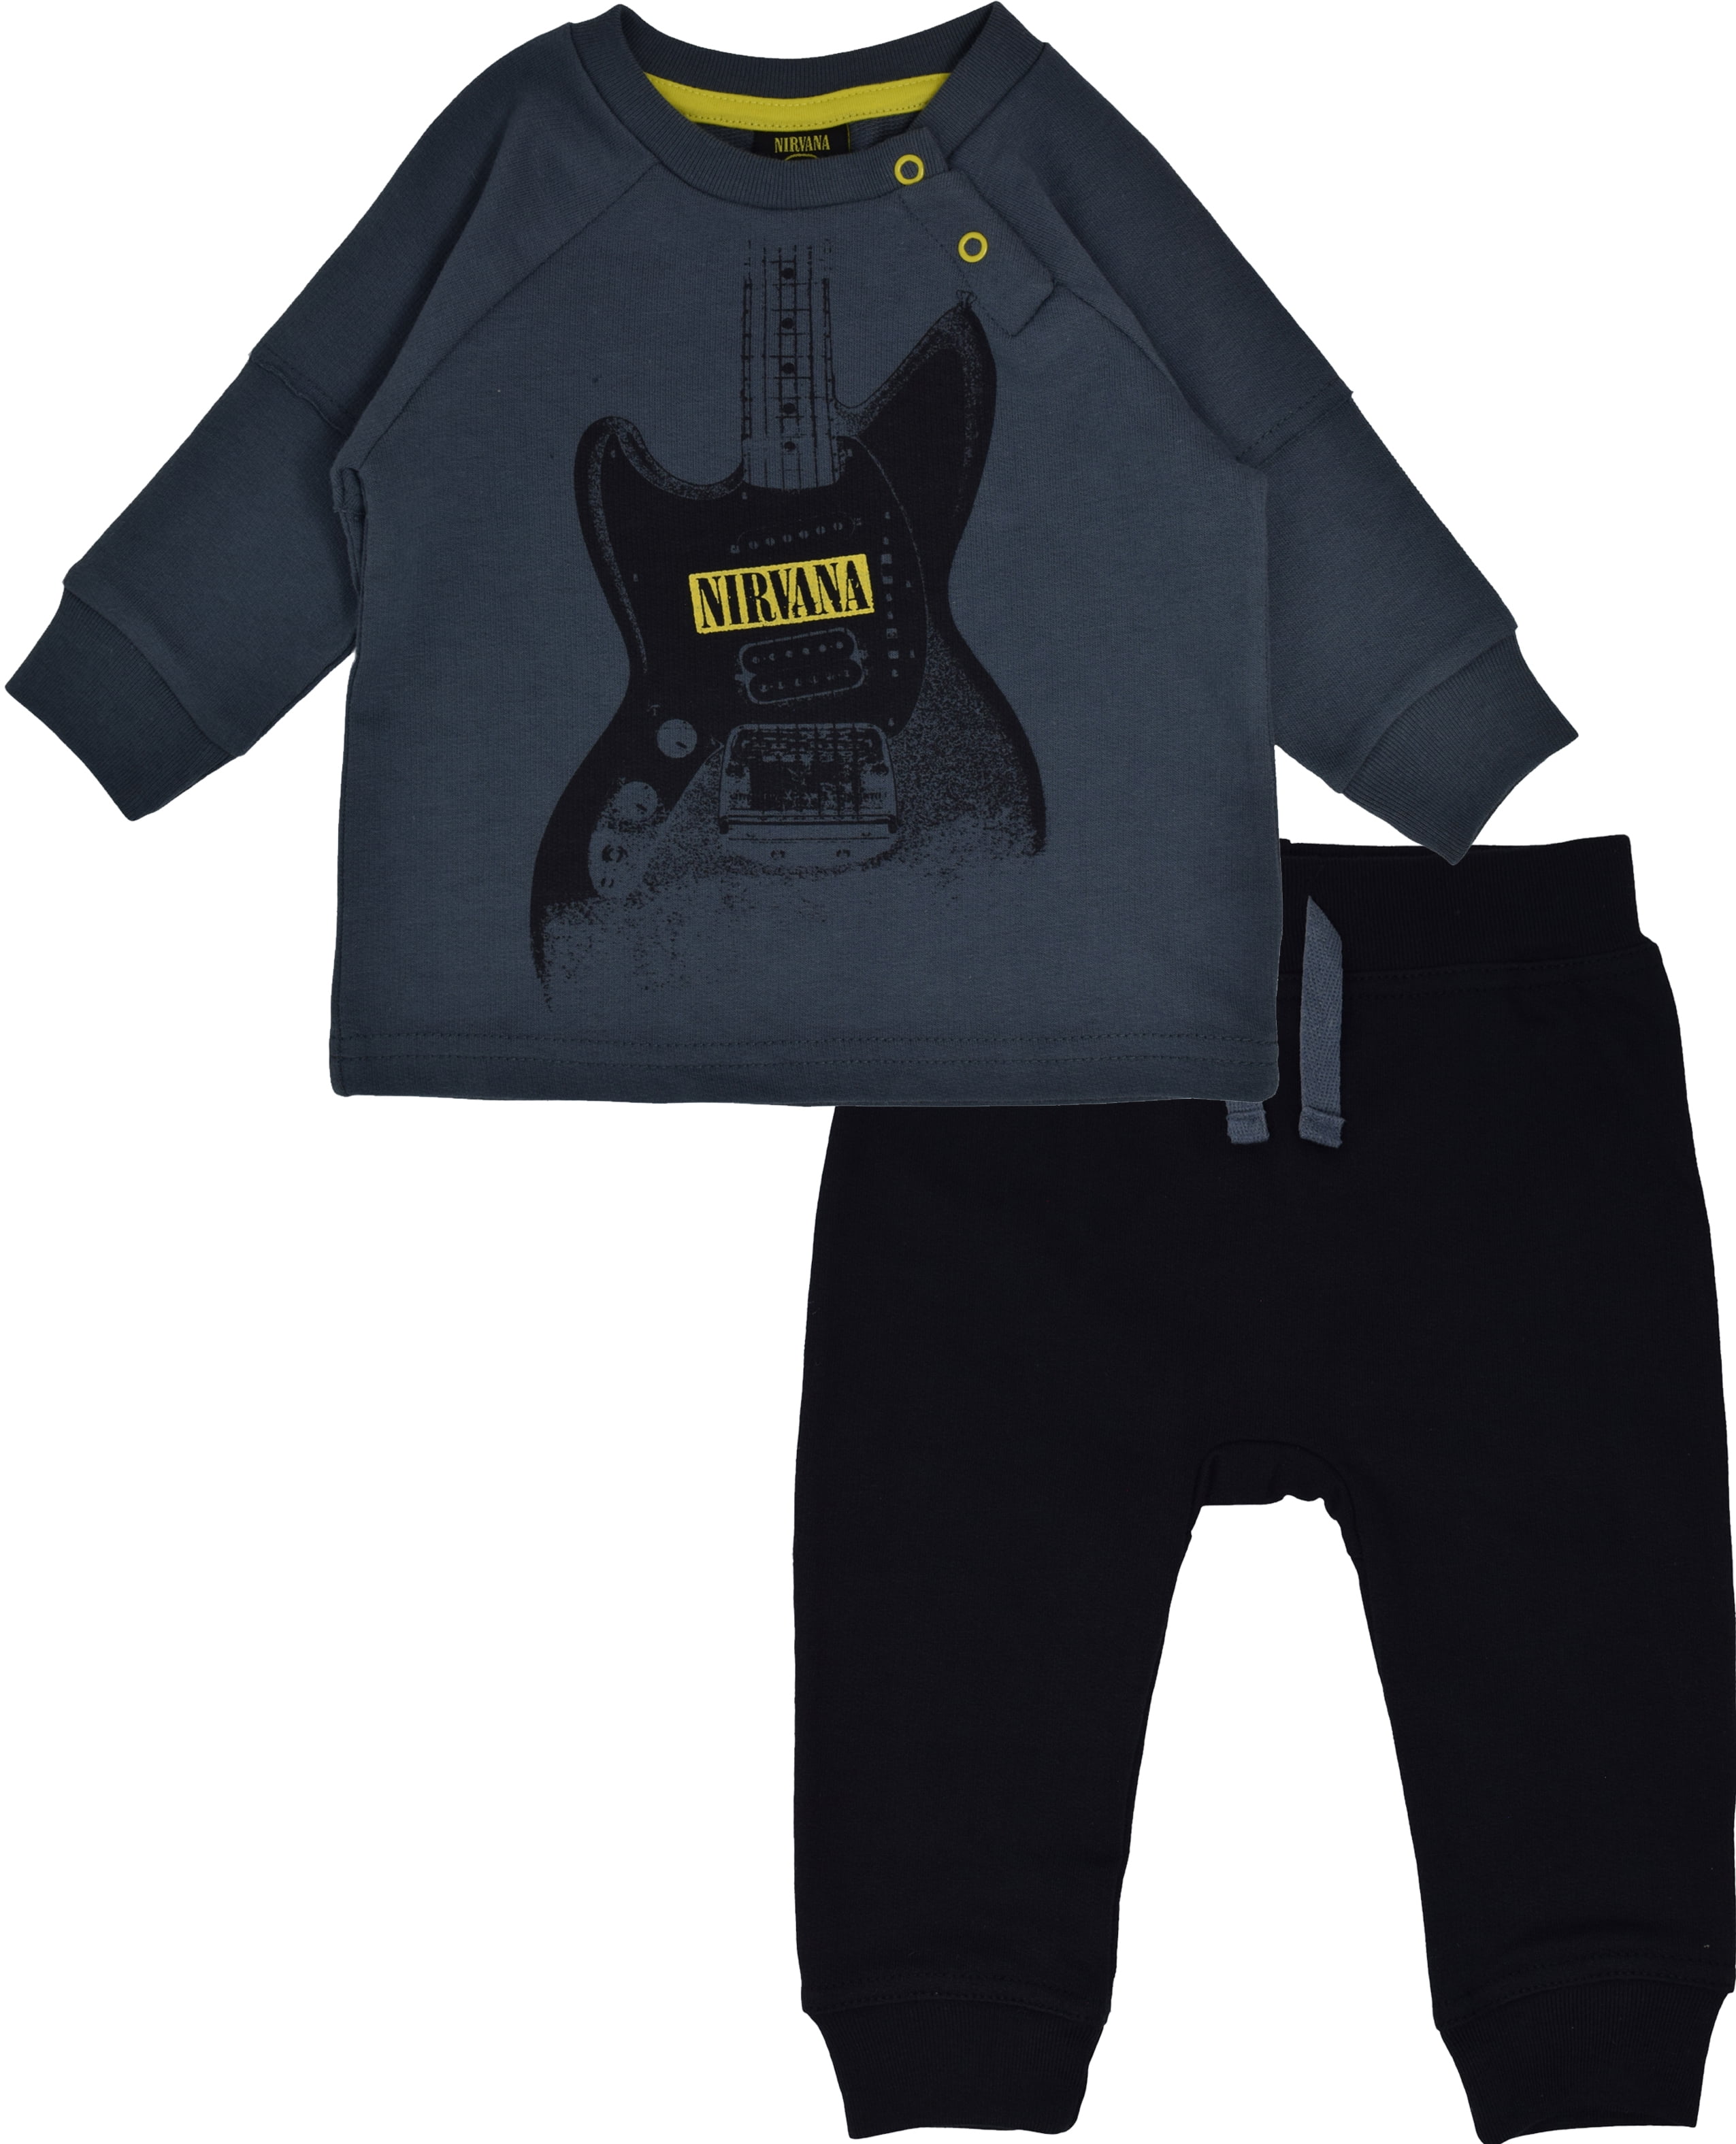 Alternative Music Infant Onesies Classic Rock Band Toddler Shirt Nirvana Grunge Band Shirt